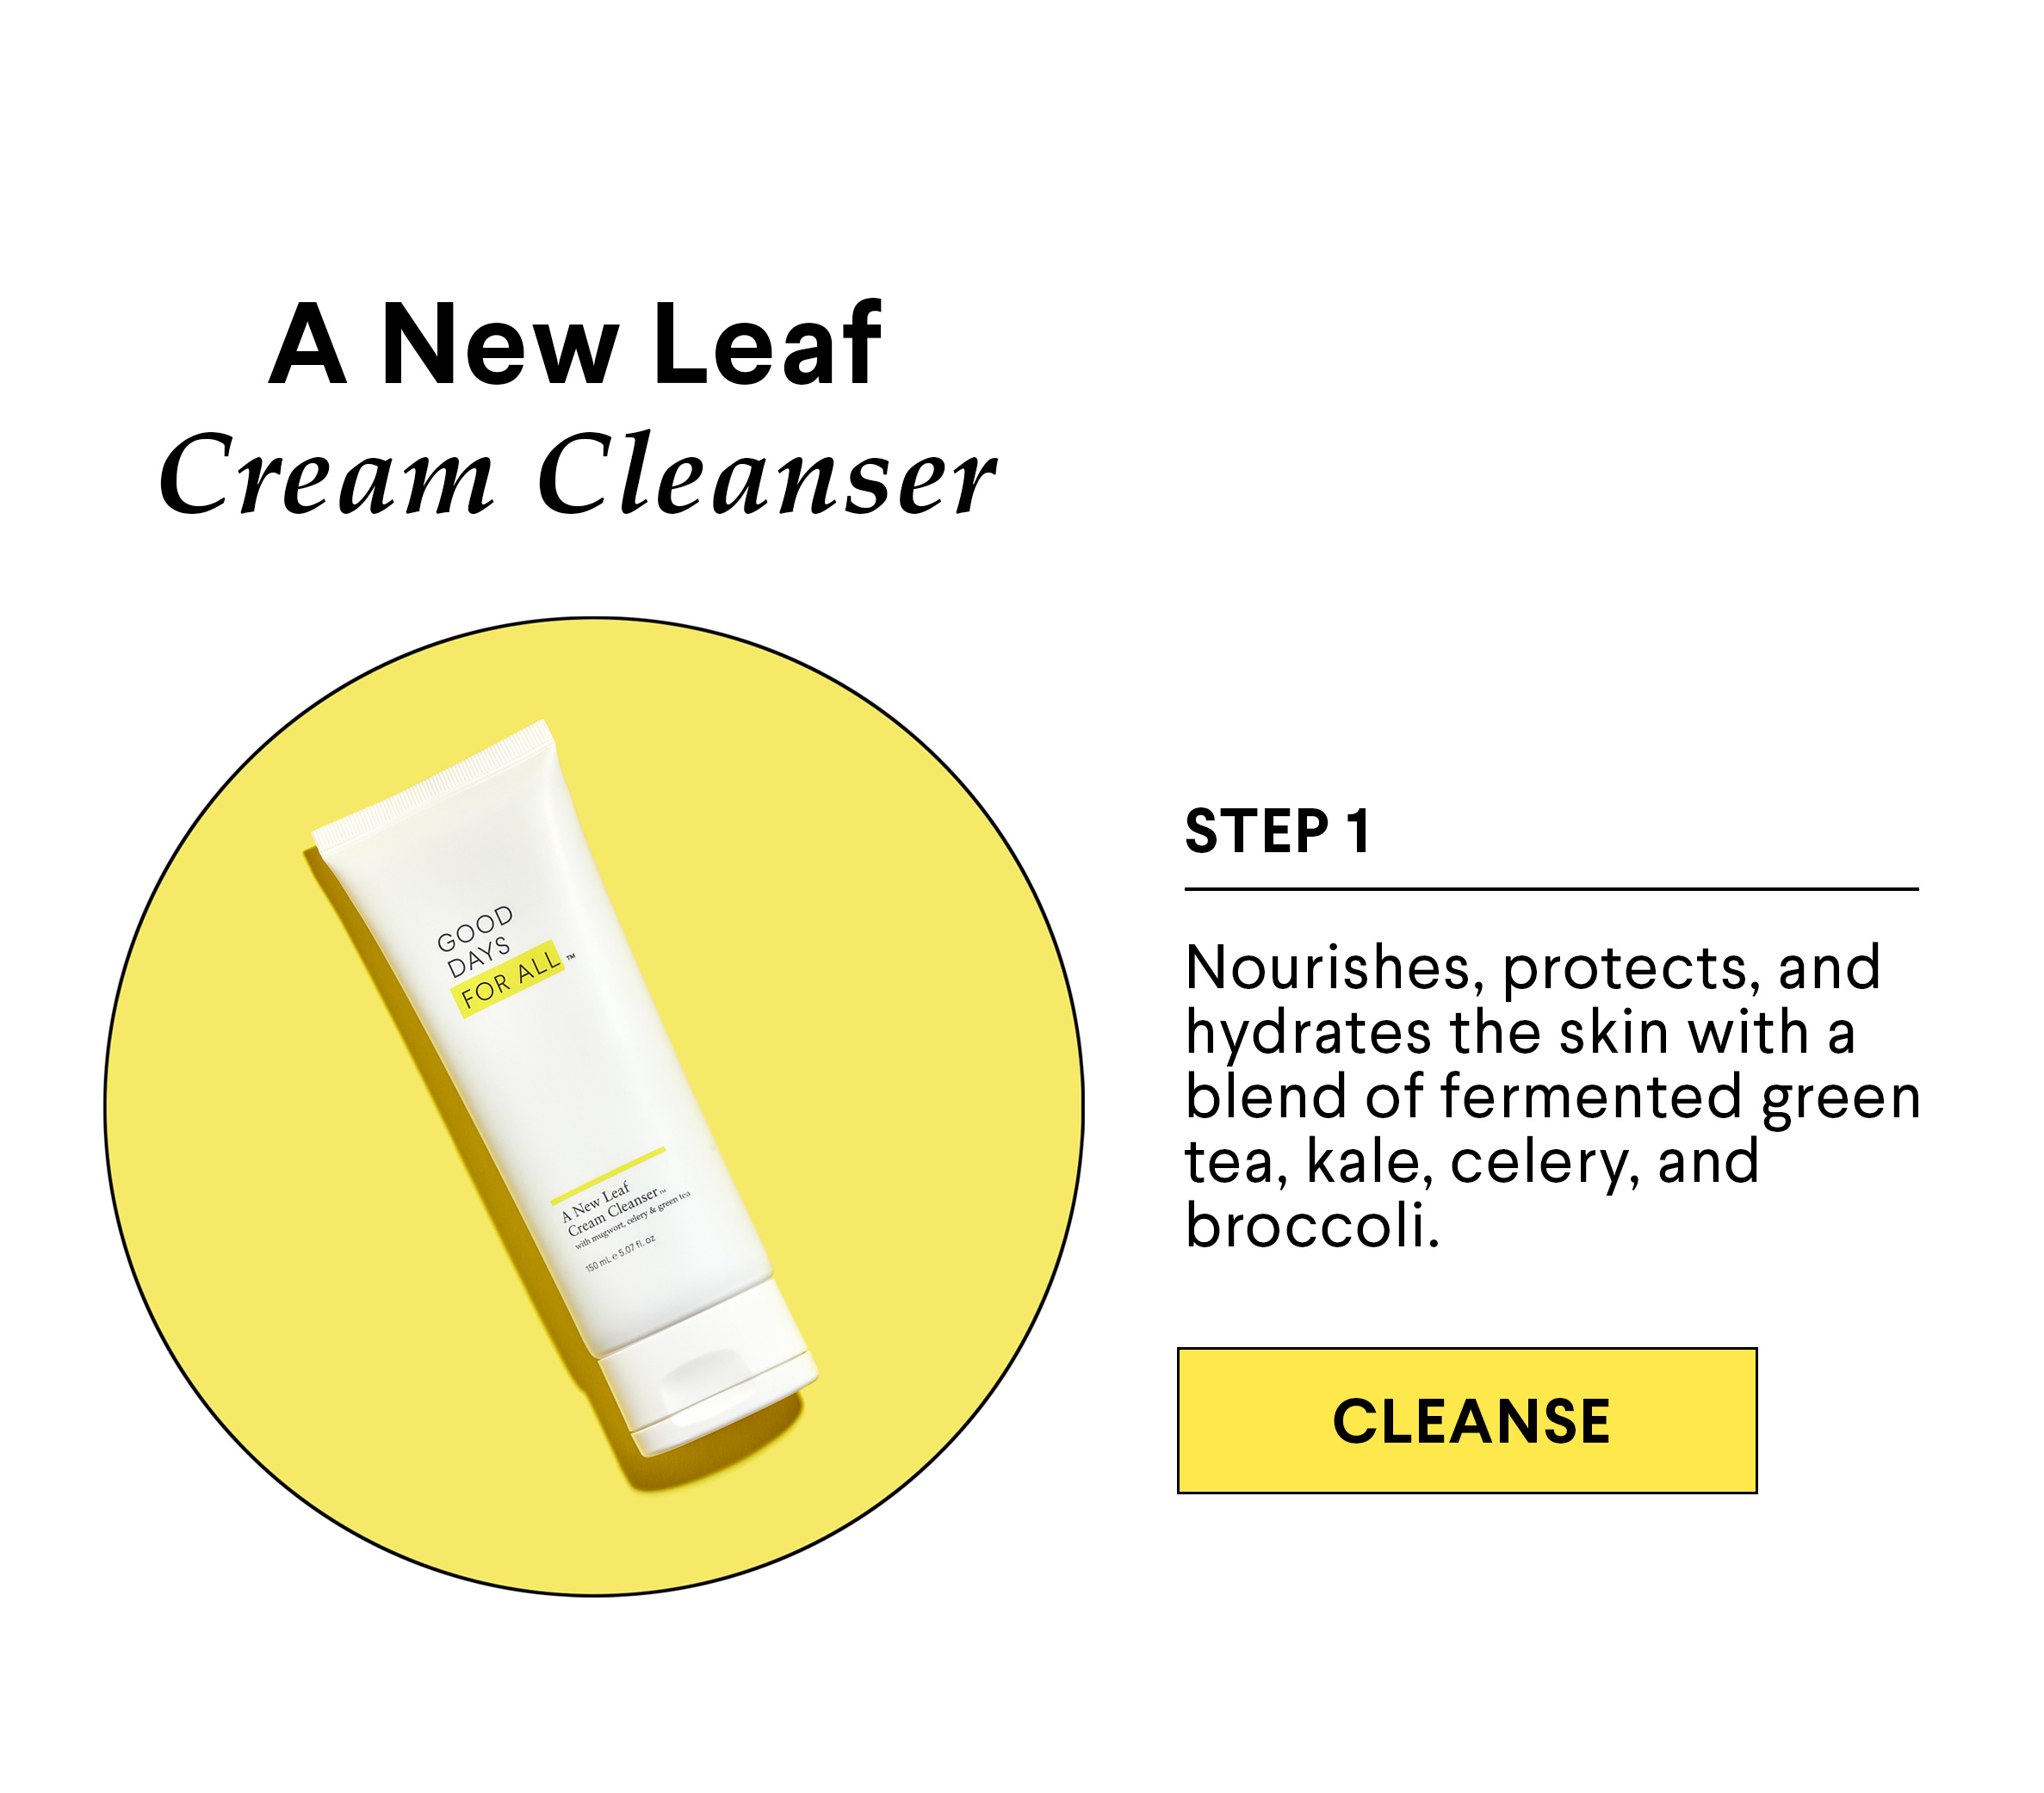 A New Leaf Cream Cleanser